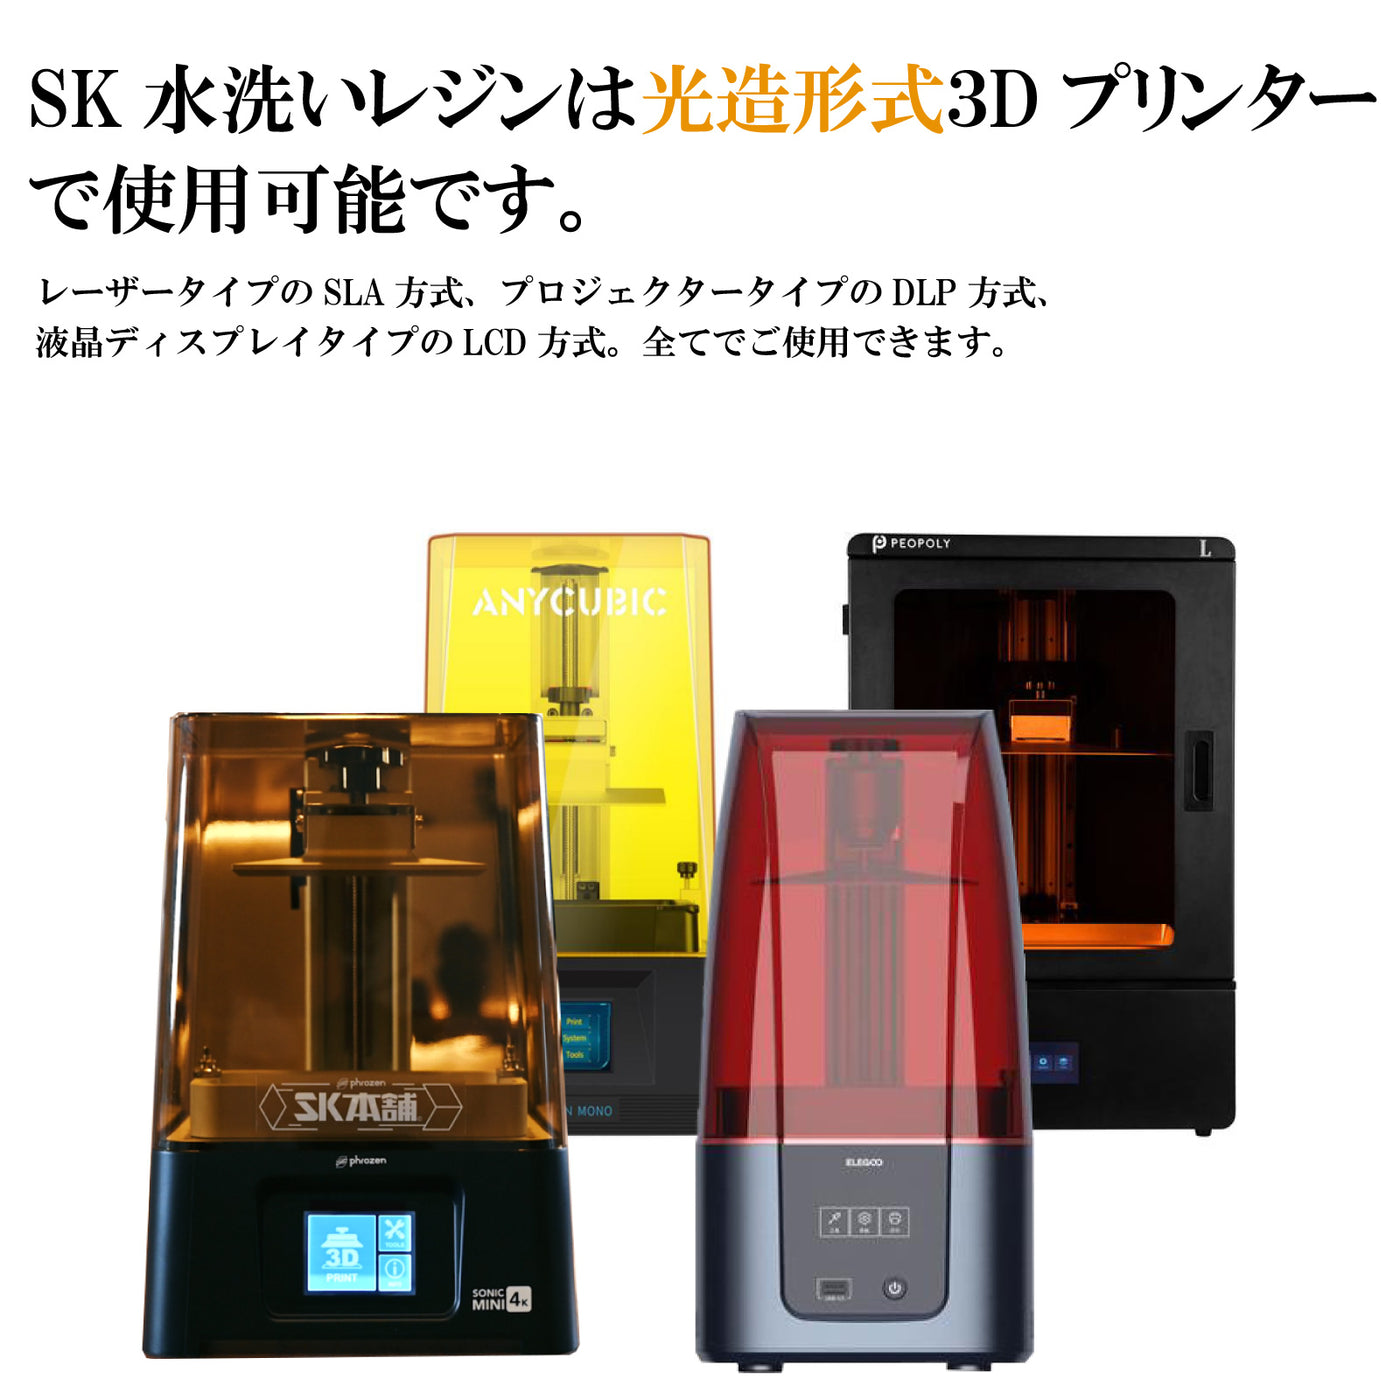 SK業務用レジン(SK Professional Resin) 5kg / 灰色+rubic.us